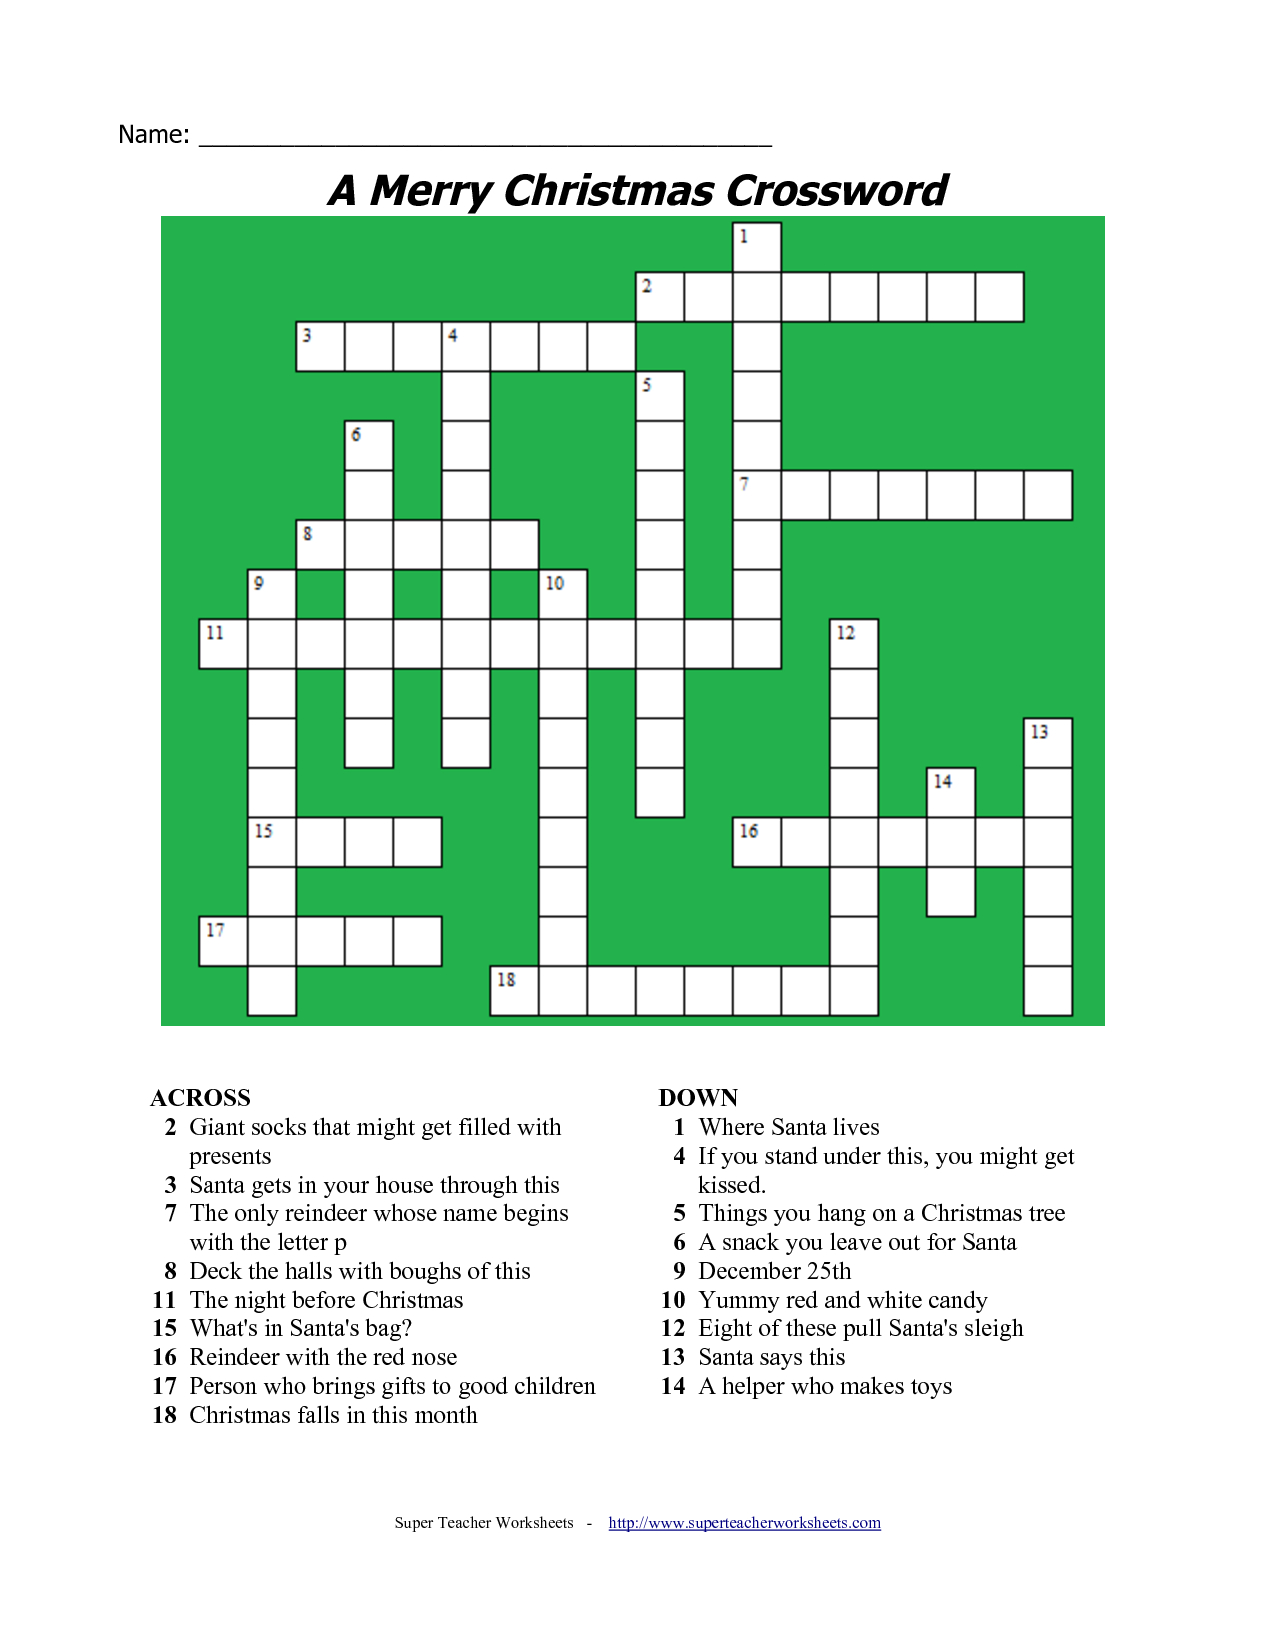 20 Fun Printable Christmas Crossword Puzzles | Kittybabylove - Printable Puzzles Christmas